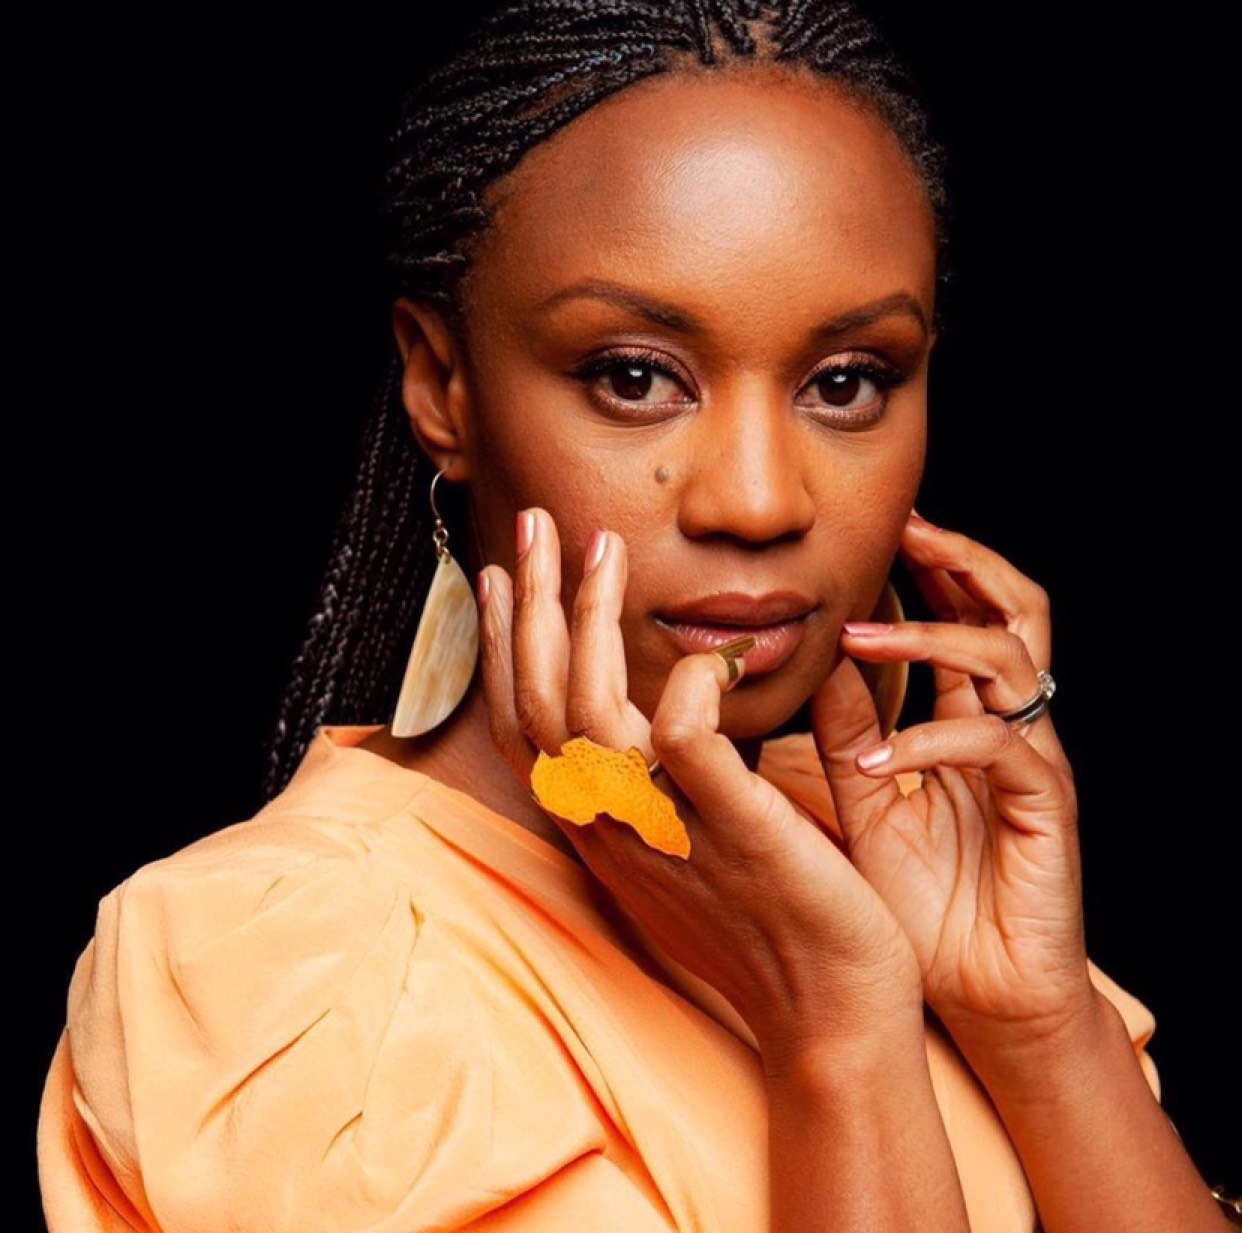 Did You Know Kenyan Film Director Wanuri Kahiu Is Directing A Big Netflix Film Titled ‘Plus/Minus’?